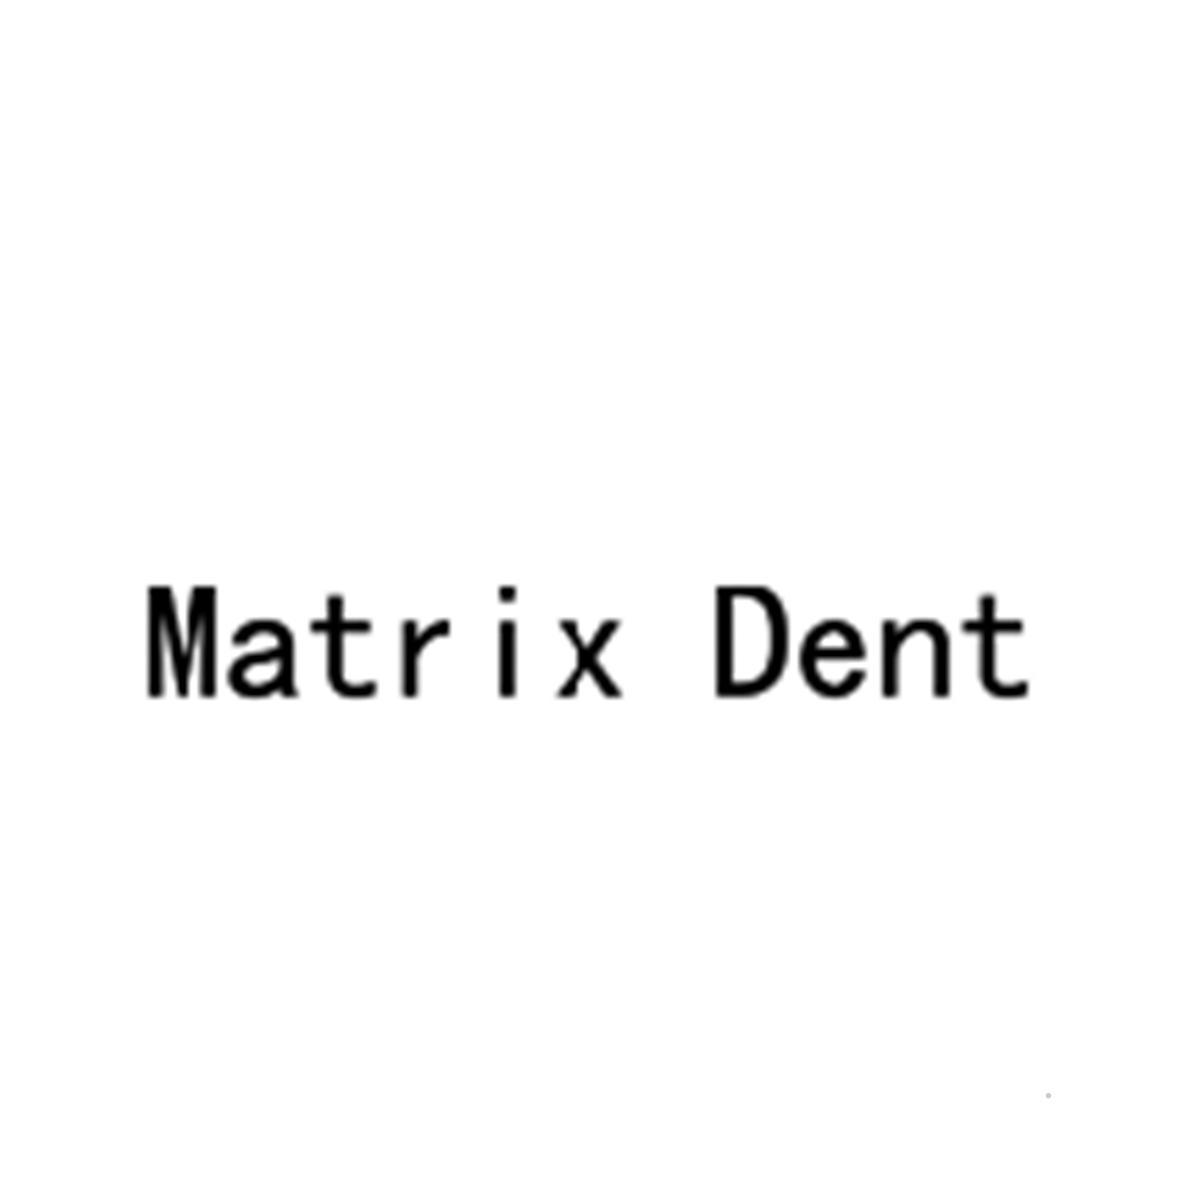 MATRIX DENTlogo